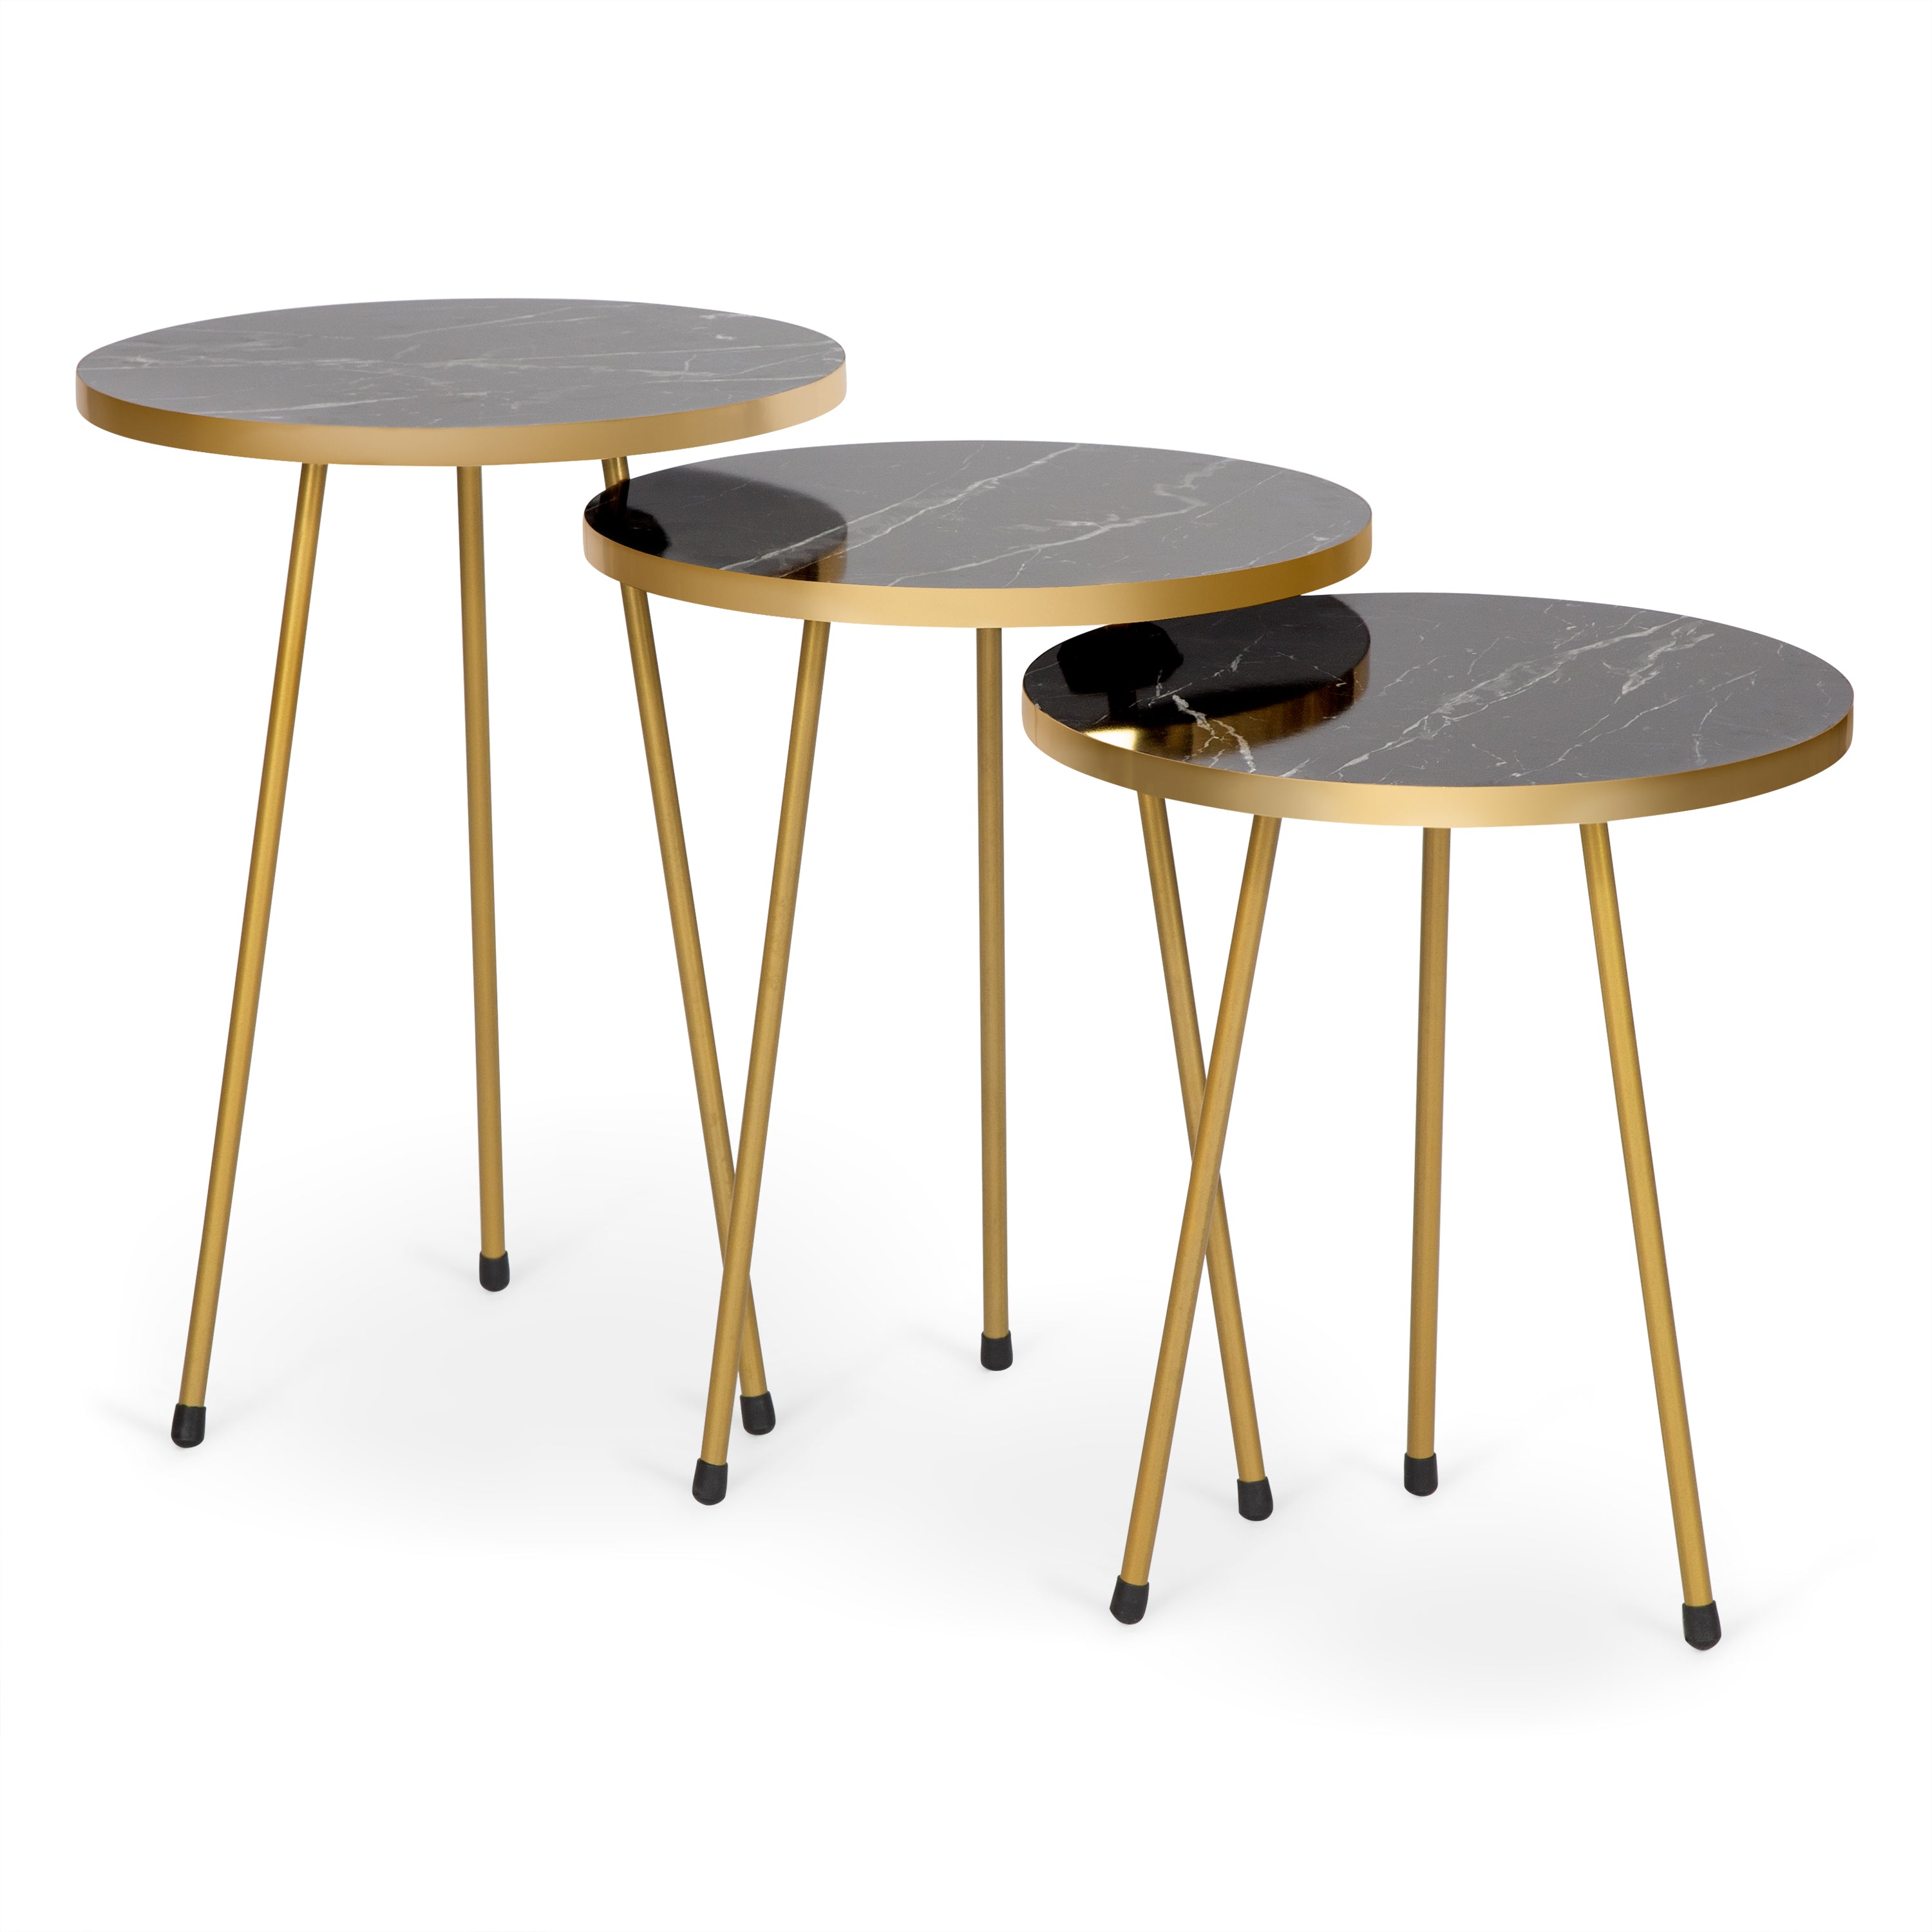 Sleek Set of 3 Round Side Tables - Black Marble & Gold